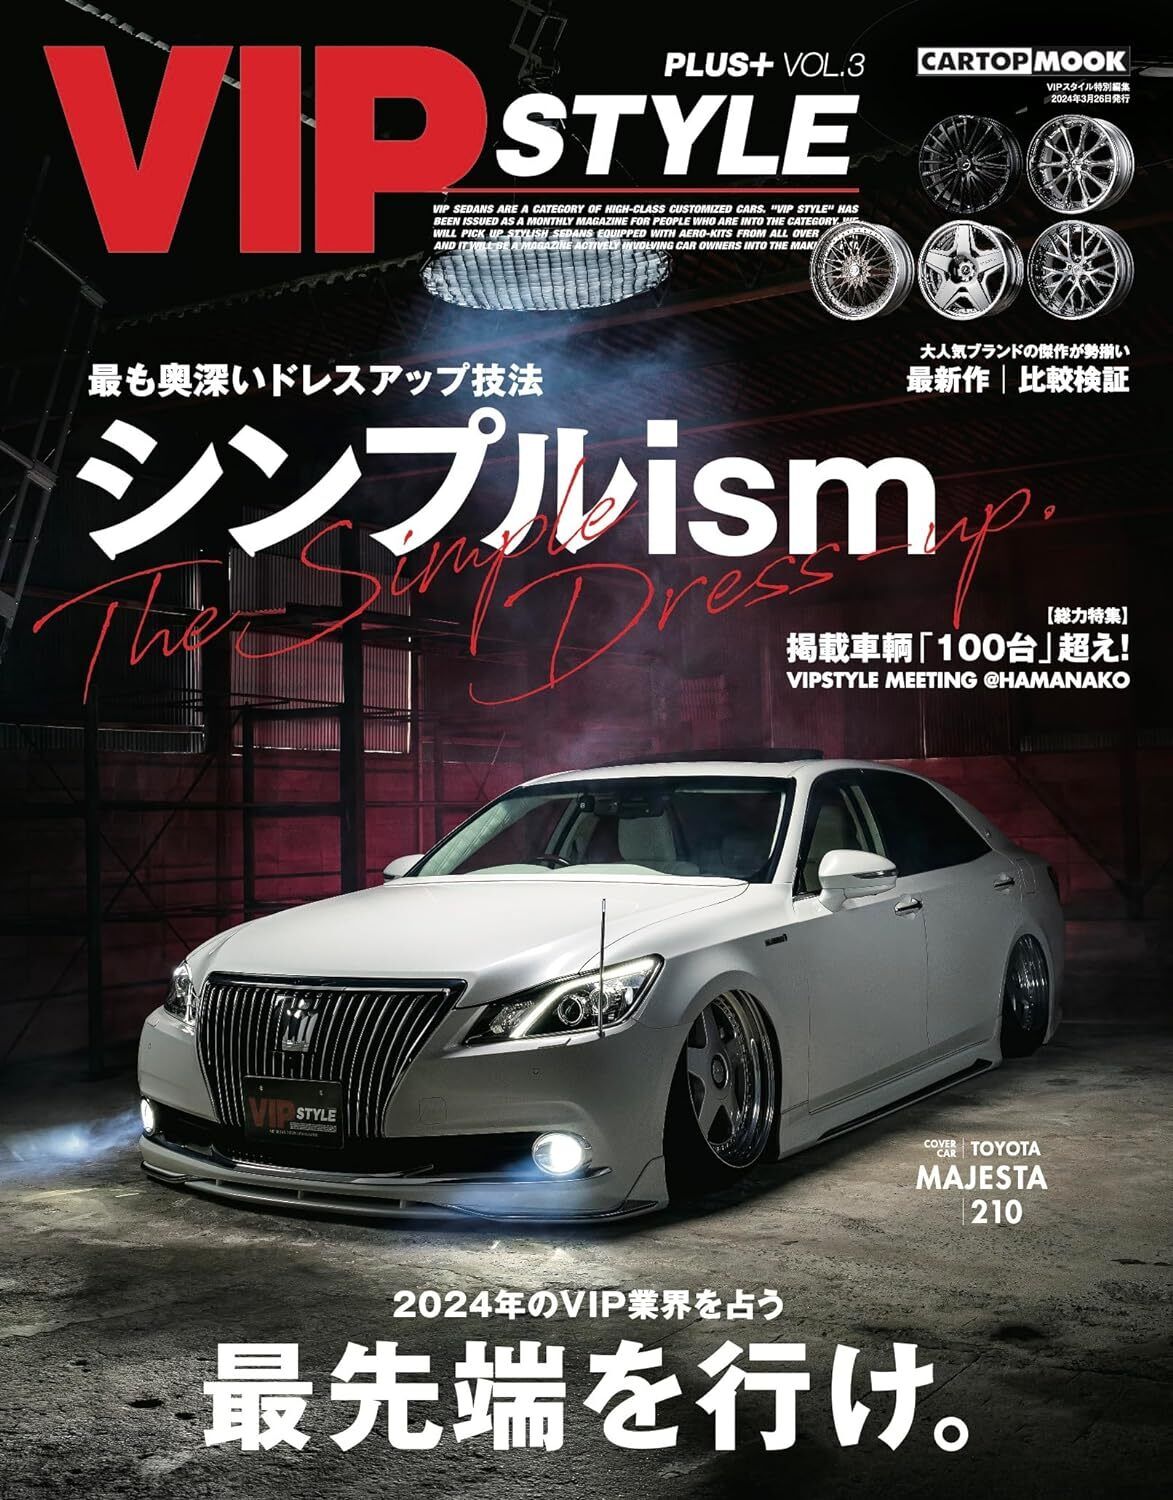 VIP STYLE PLUS vol.3 magazine TOYOTA CROWN LEXUS MAJESTA Japanese Book New